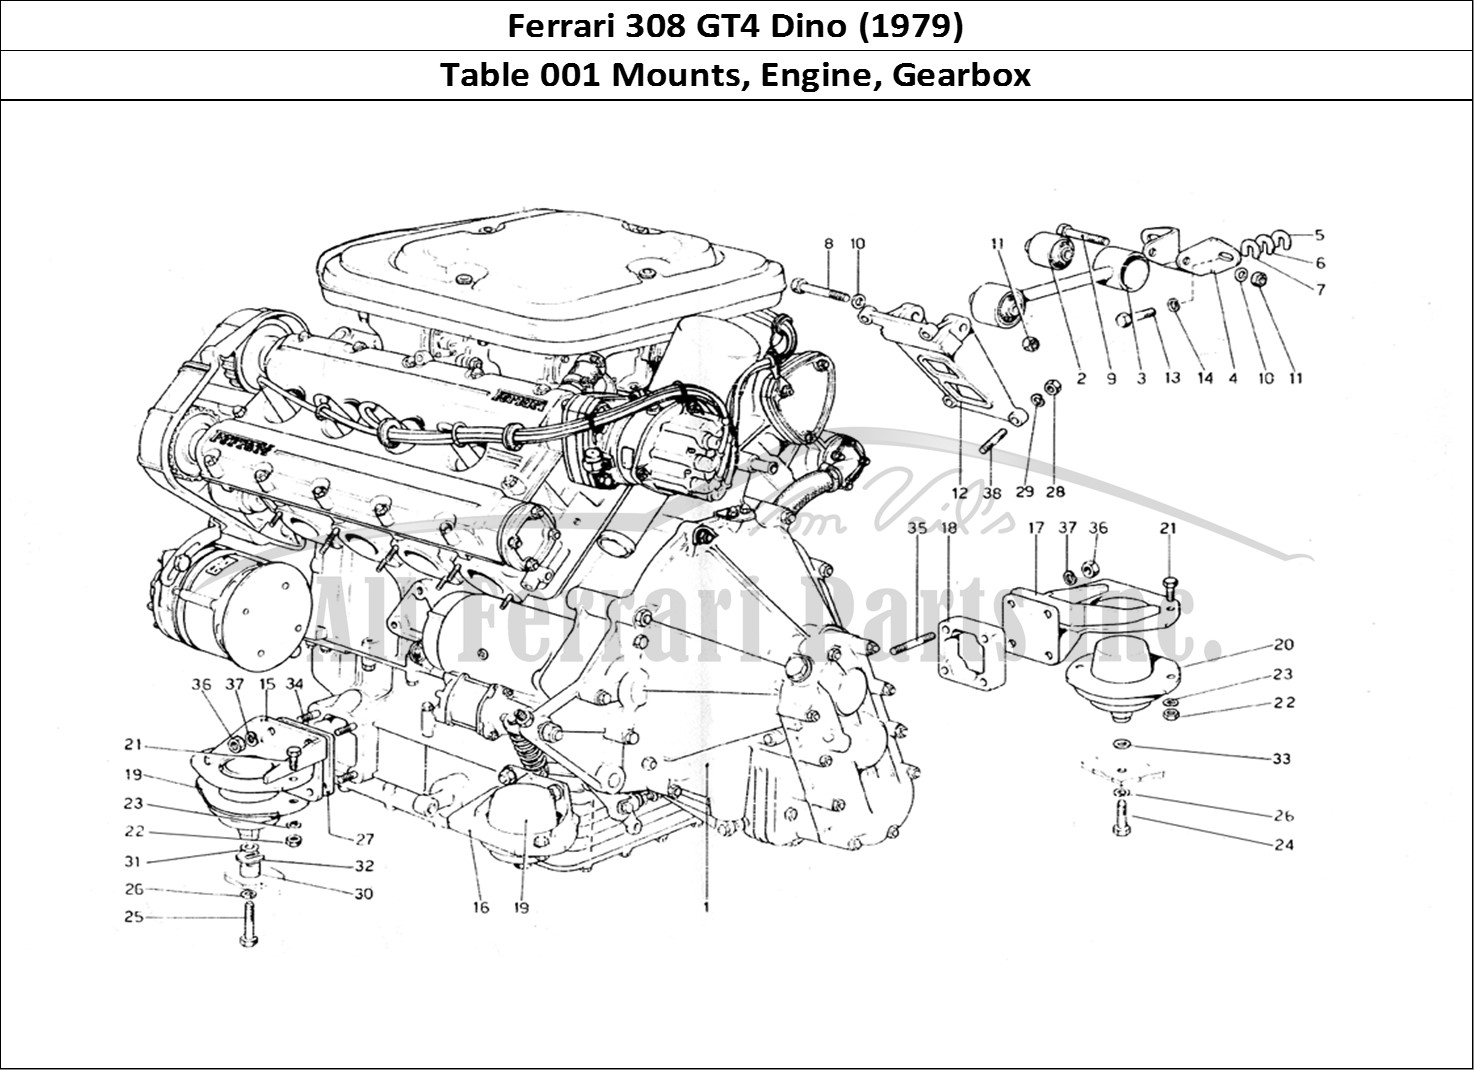 Ferrari Parts Ferrari 308 GT4 Dino (1979) Page 001 Engine - Gearbox and Supp